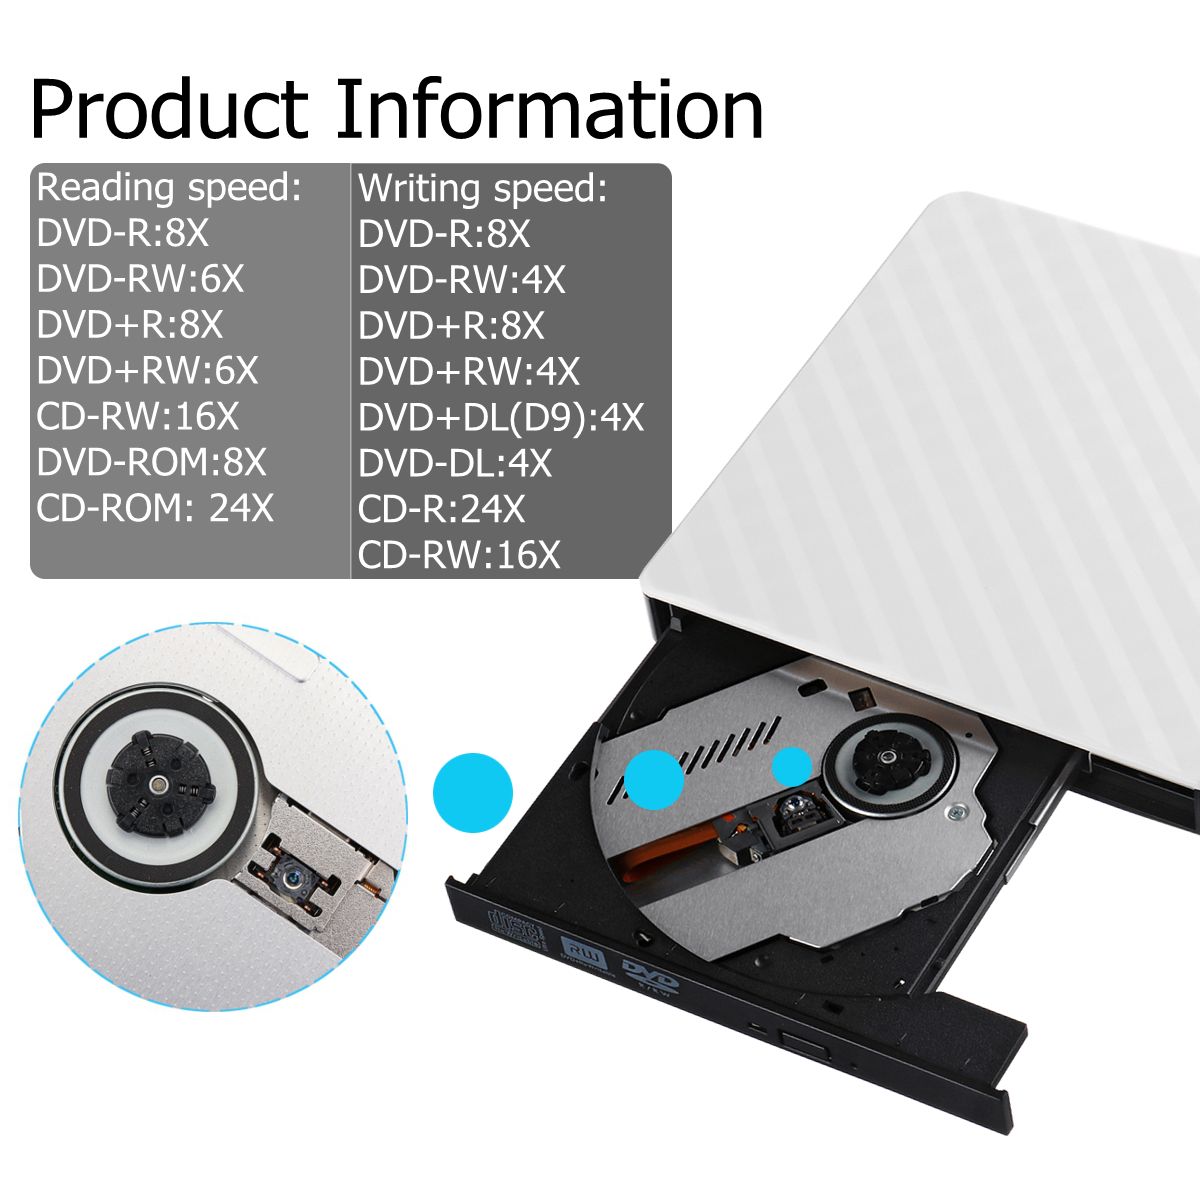 External-USB-30-DVD-RW-CD-Writer-Slim-Carbon-Grain-Drive-Burner-Reader-Player-For-PC-Laptop-Optical--1536013